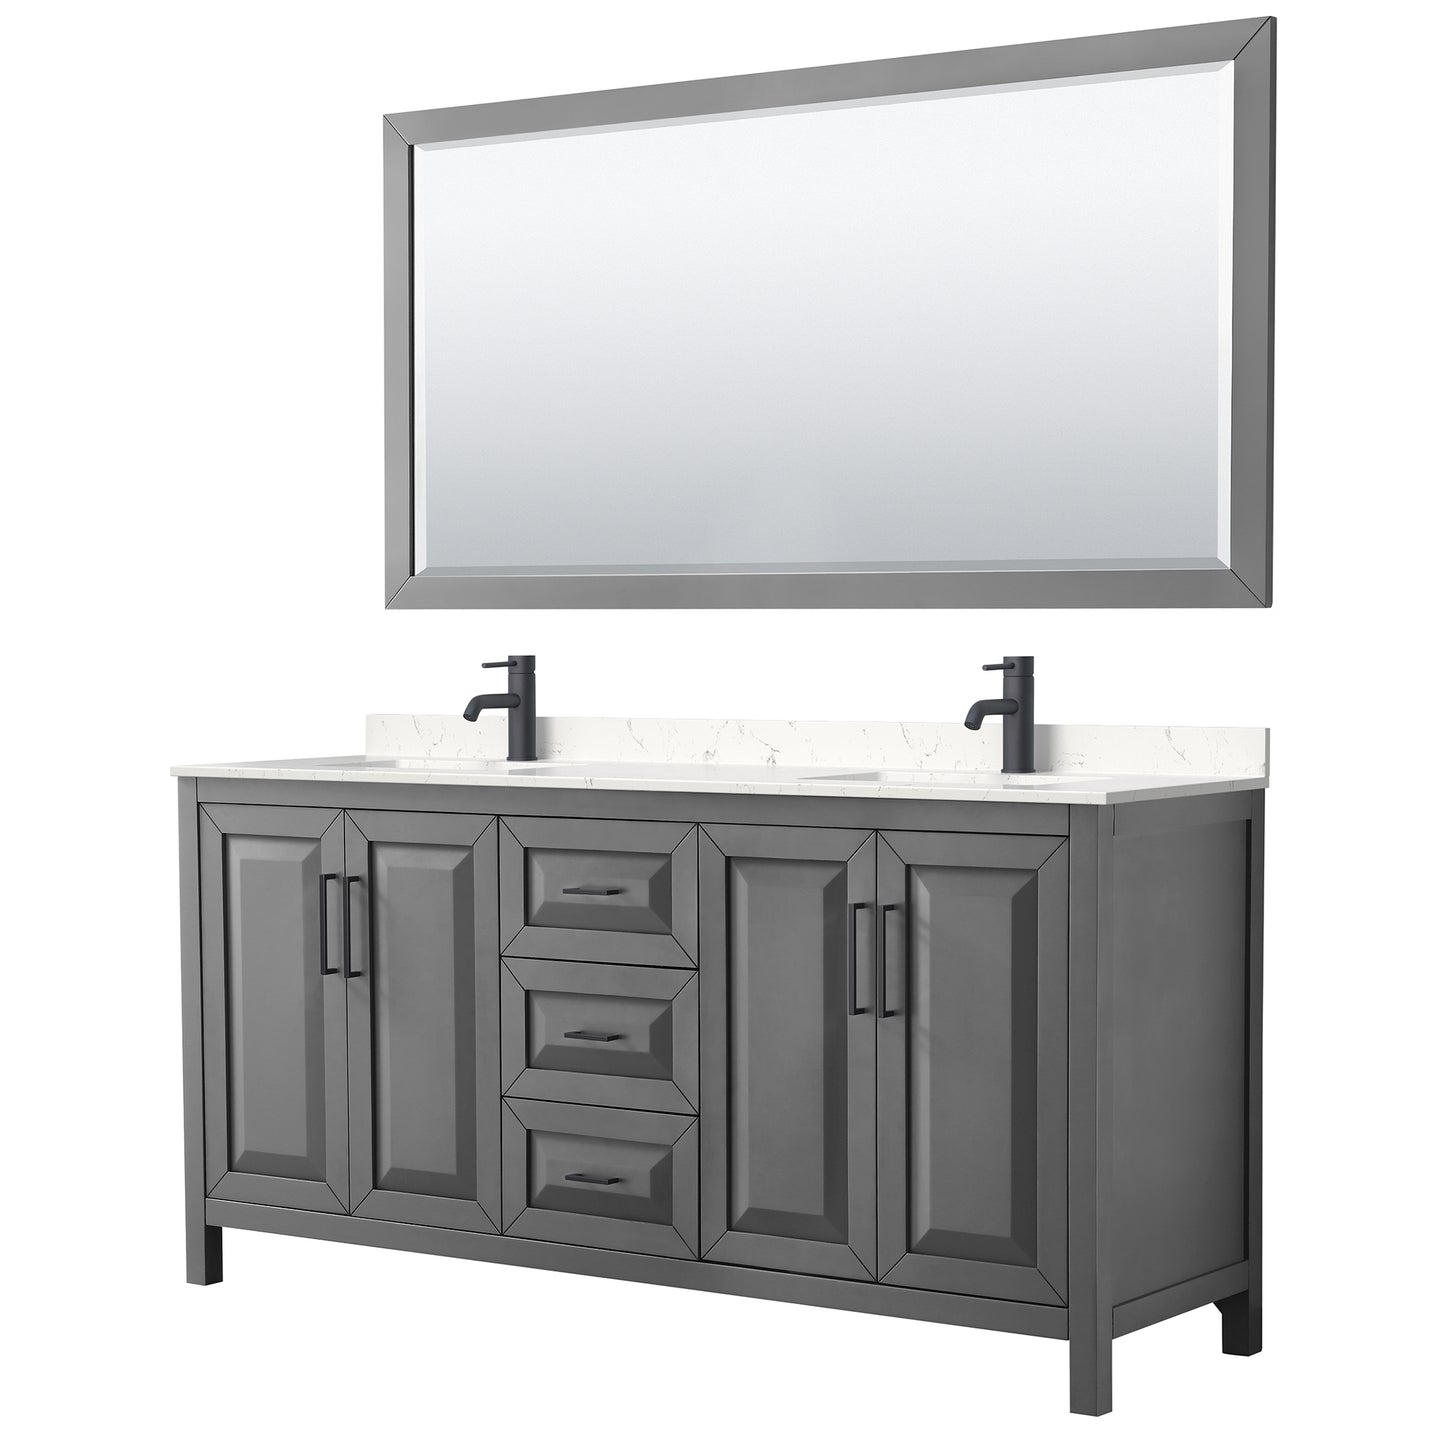 Wyndham Daria 72 Inch Double Bathroom Vanity Light-Vein Carrara Cultured Marble Countertop, Undermount Square Sinks in Matte Black Trim with 70 Inch Mirror - Luxe Bathroom Vanities